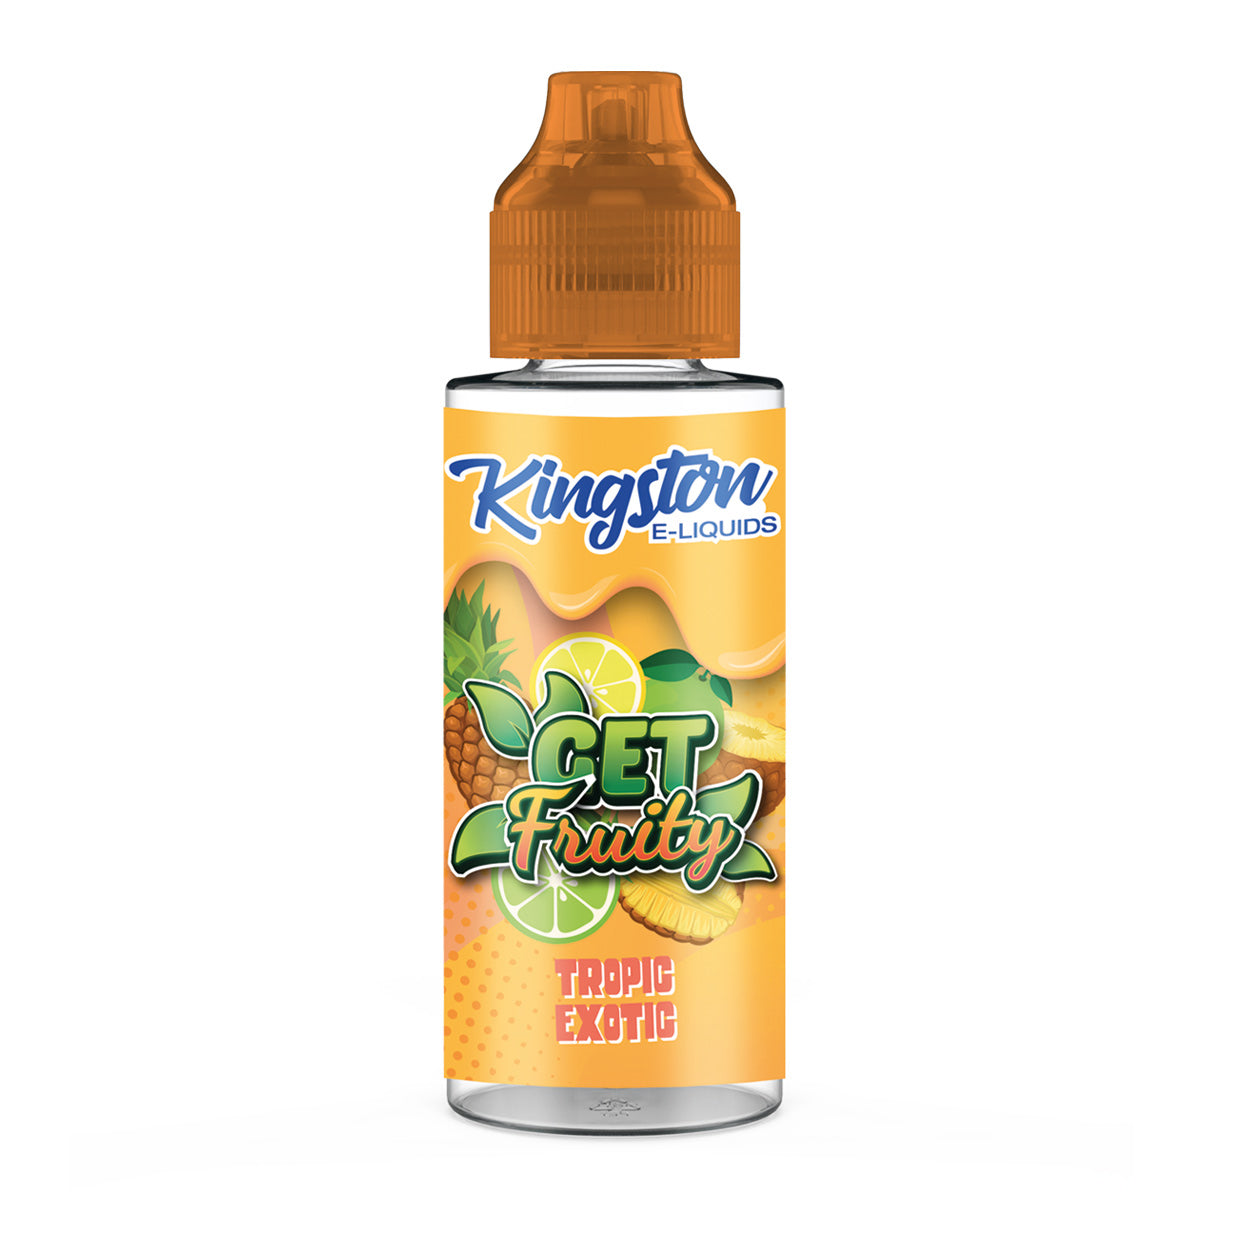 Kingston-Get-Fruity-Tropic-Exotic-kingston-e-liquids-100ml-vape-juice-e-liquid-eliquidsoutlet-shortfill-120-ml